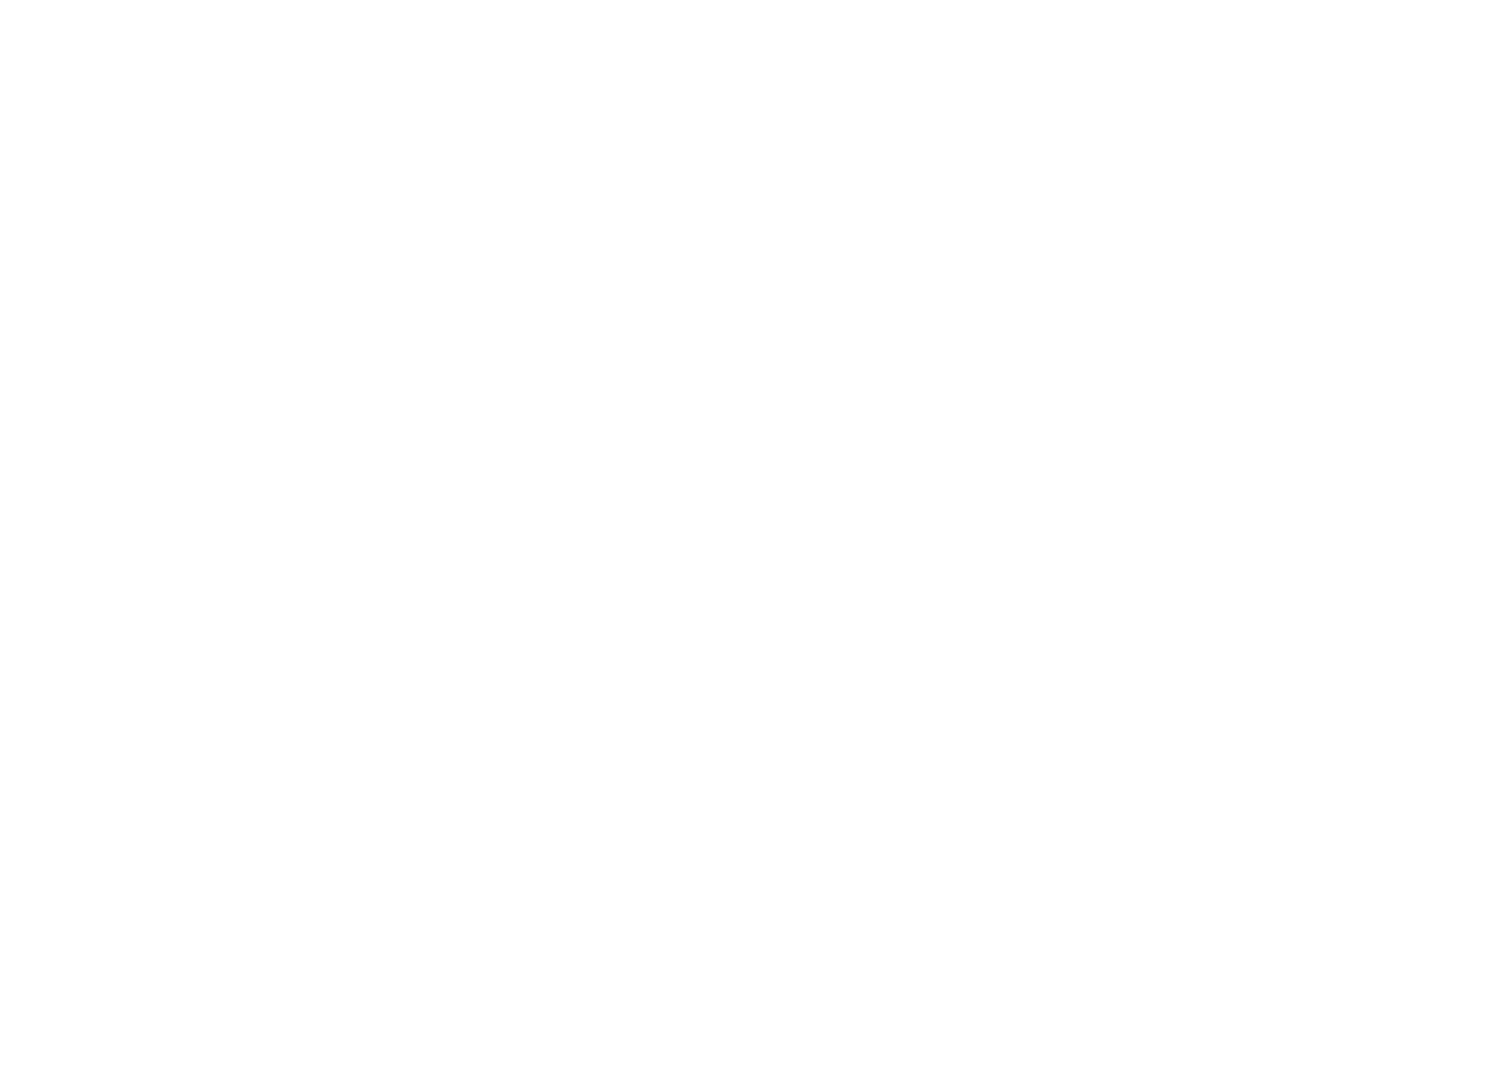 Riata Ranch International